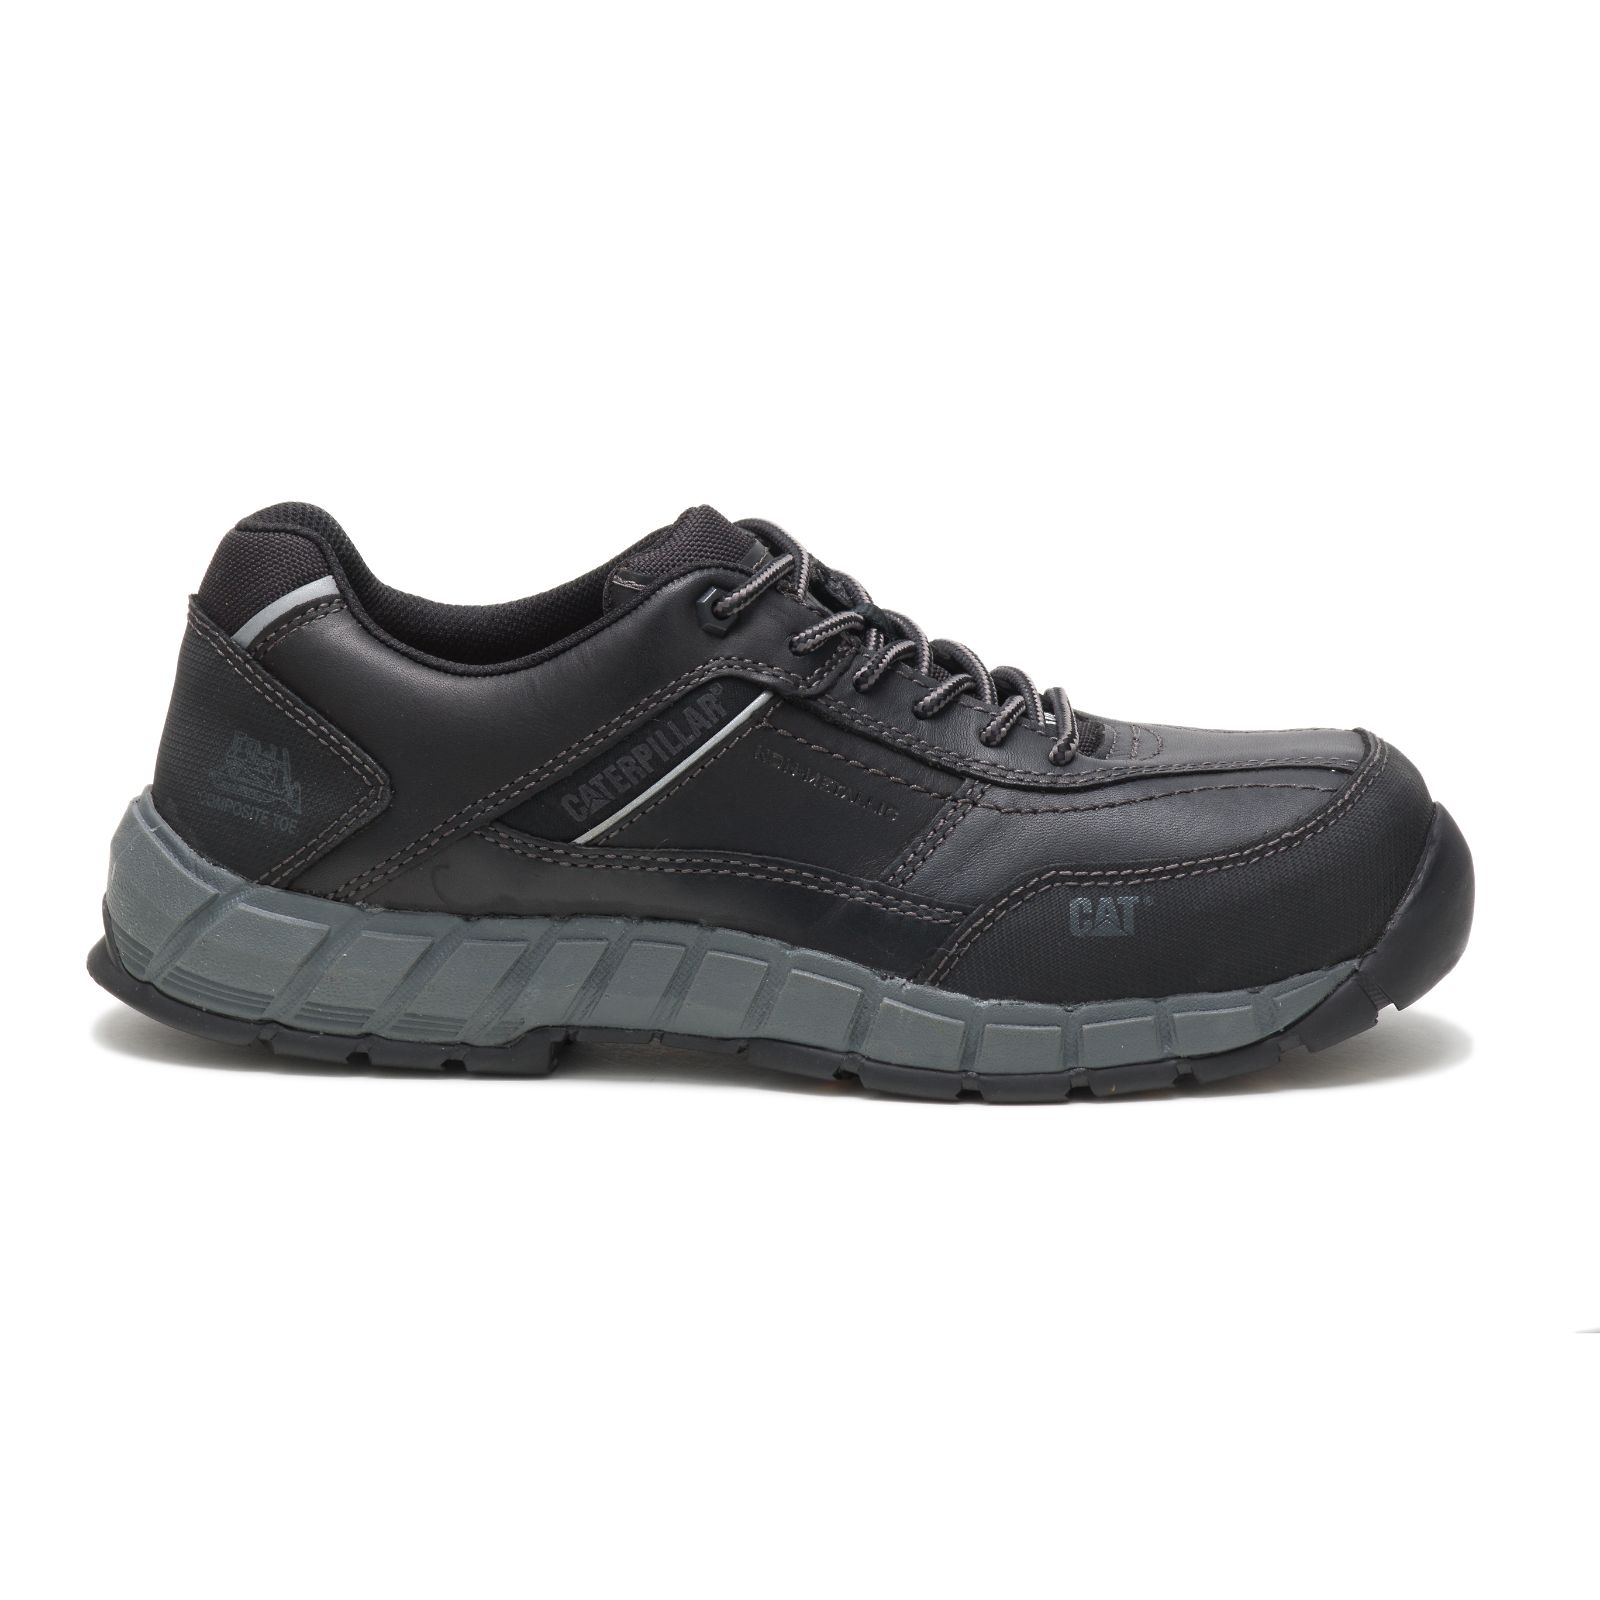 Caterpillar Shoes Pakistan - Caterpillar Streamline Leather Composite Toe Mens Sneakers Black (764951-MJL)